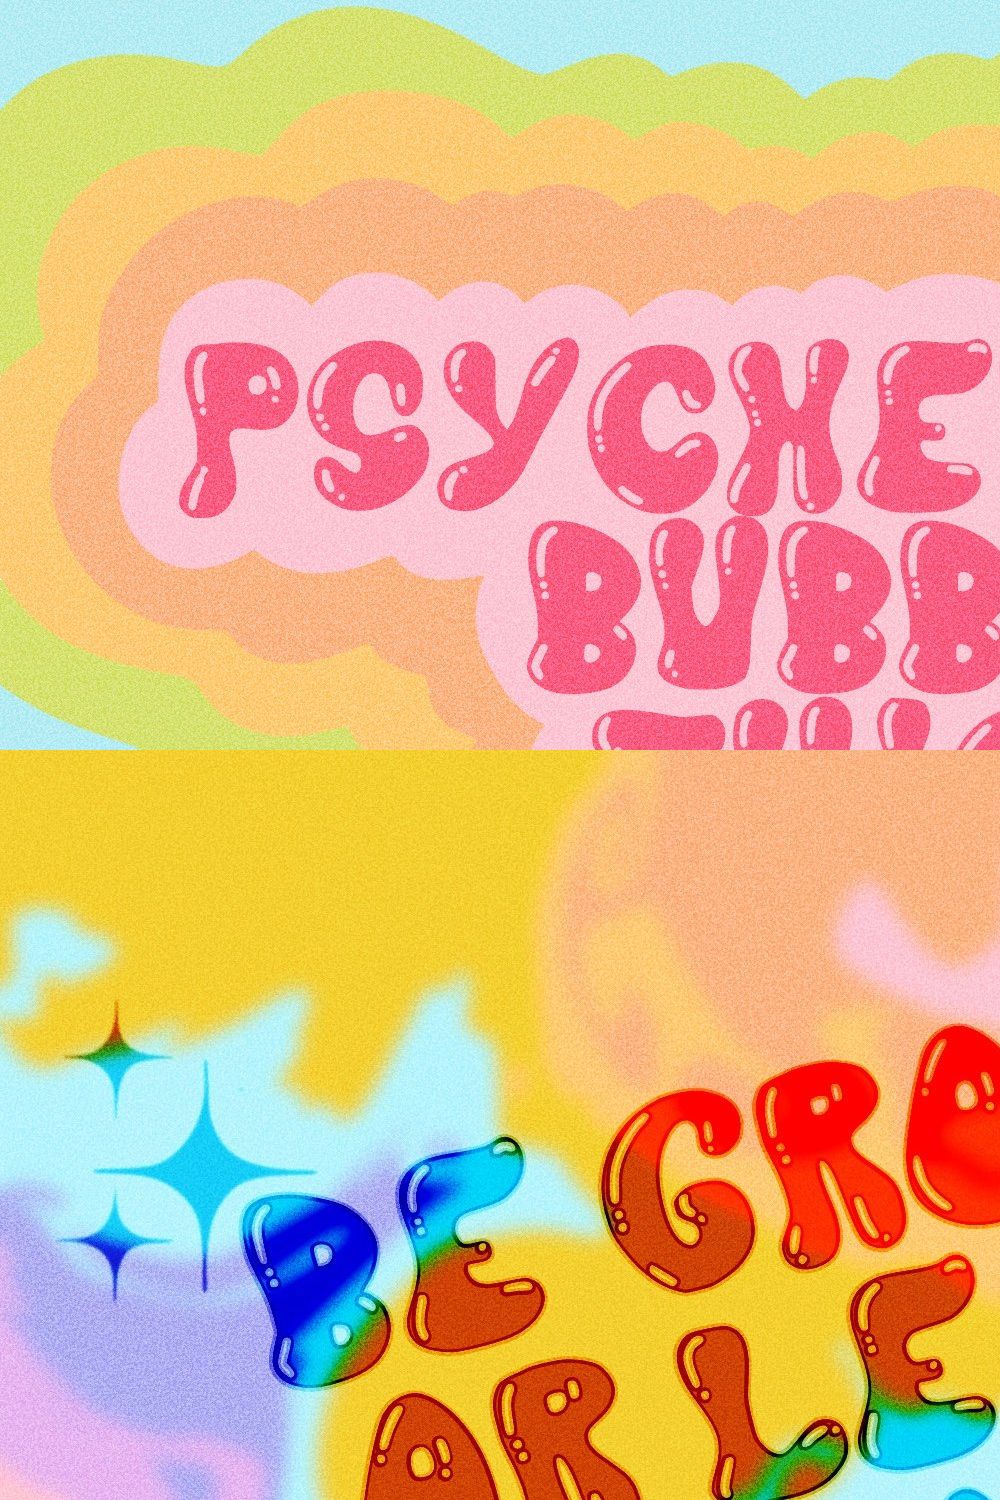 Psychedelic Bubble Juicy Font pinterest preview image.